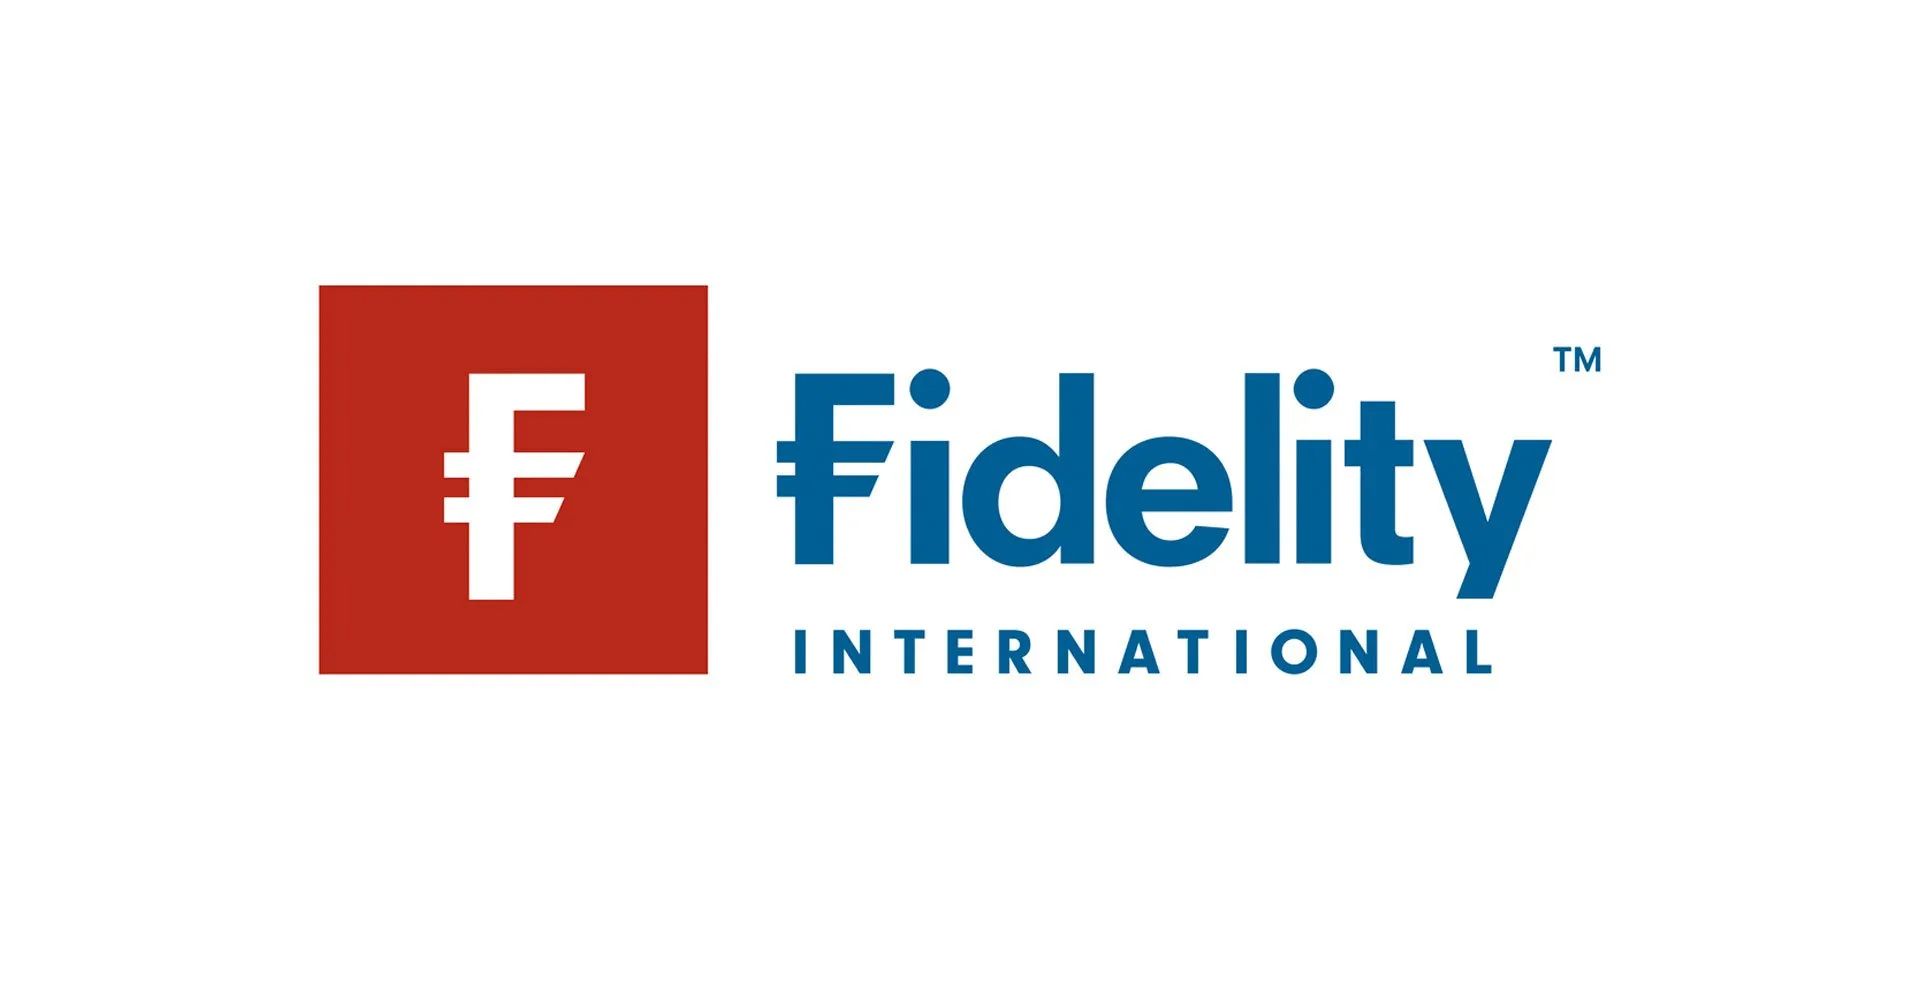 Fidelity International Logo